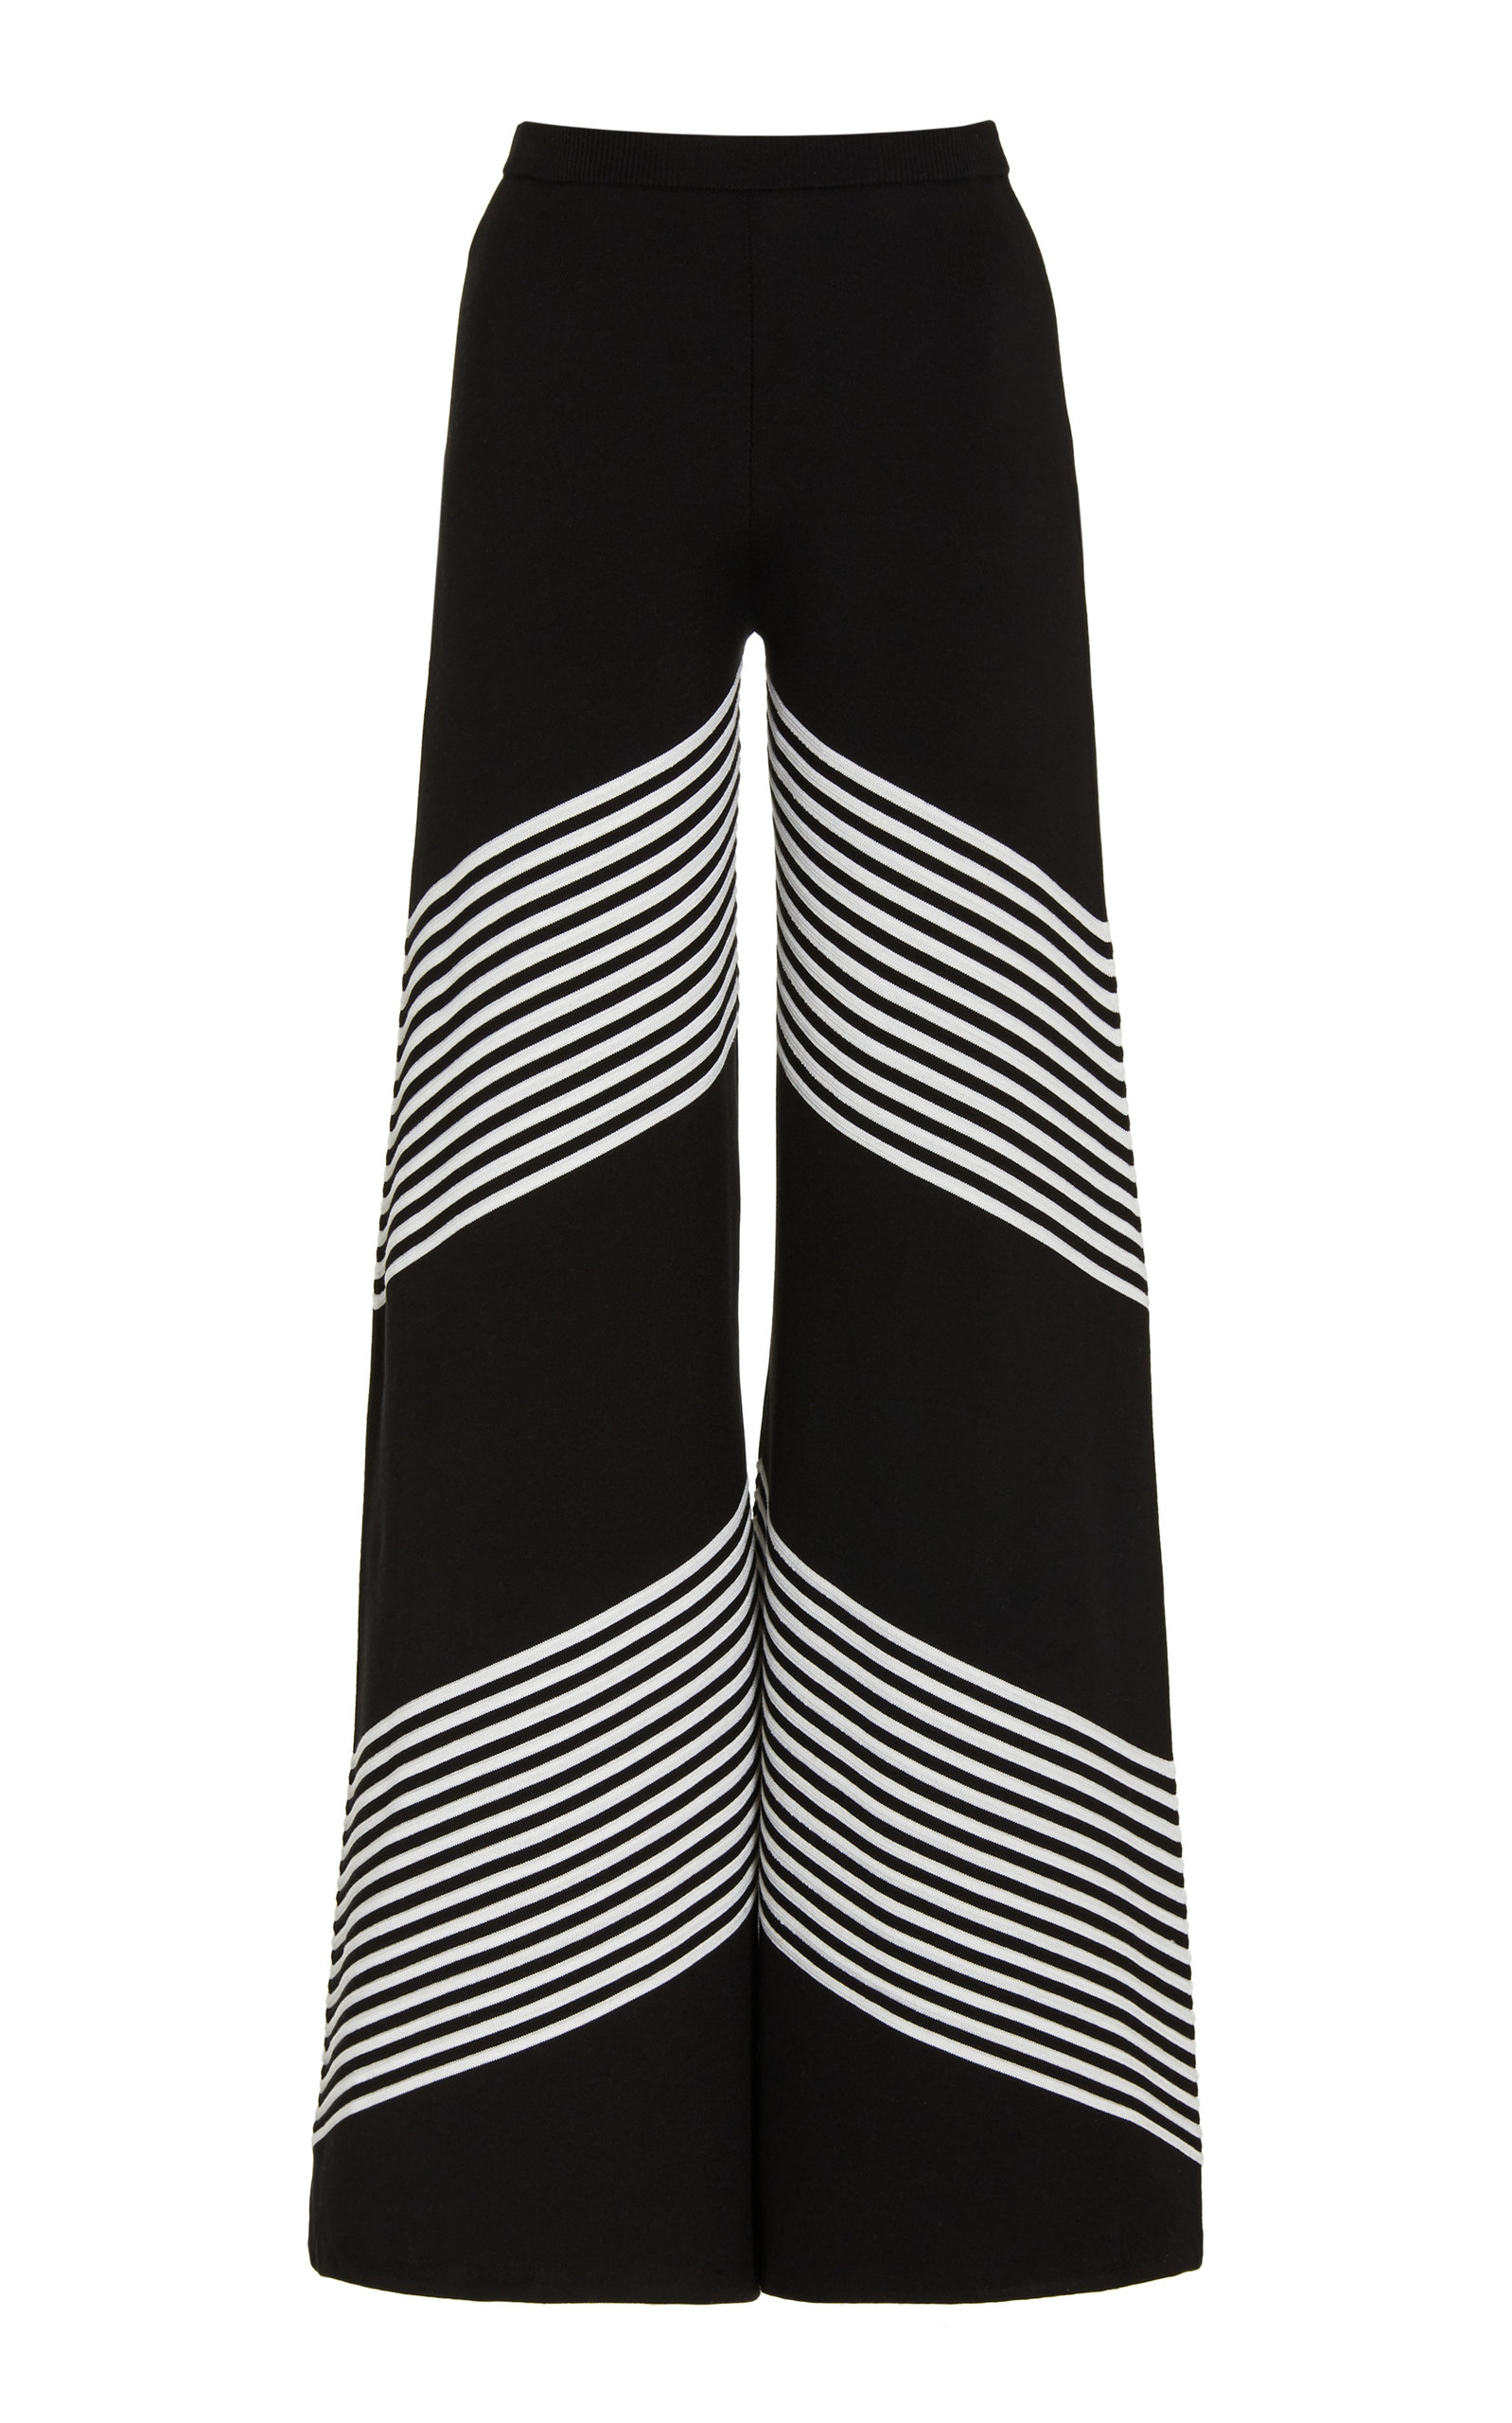 Carolina Herrera - Women's Chevron Silk-Blend Wide-Leg Pants - Black/white - L - Moda Operandi